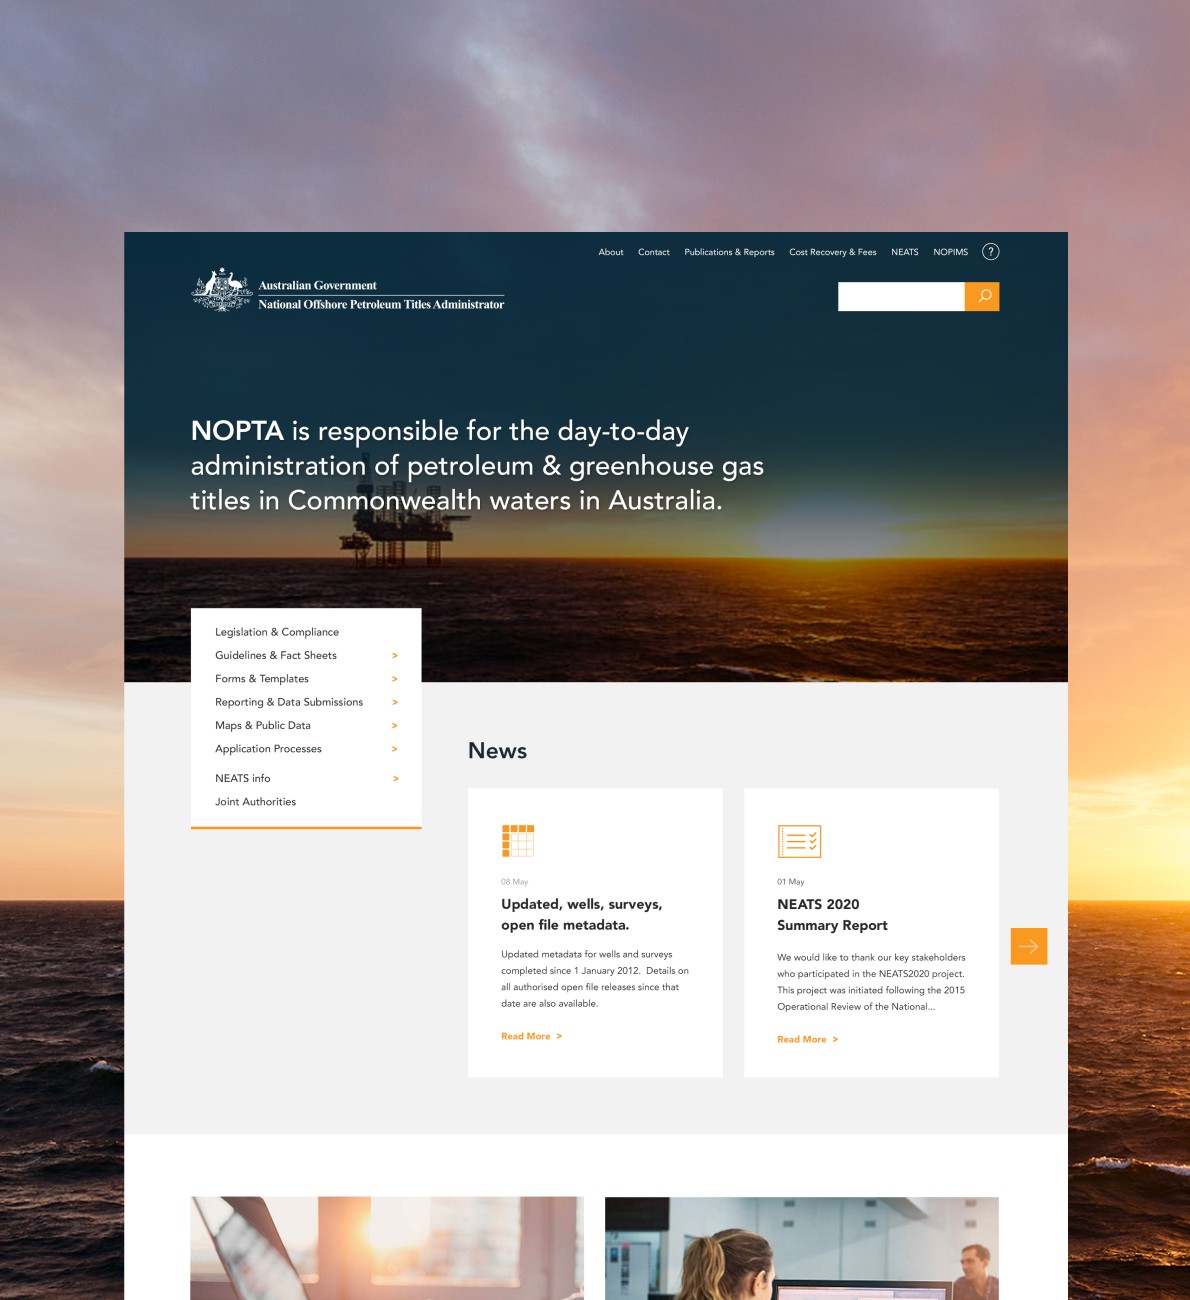 NOPTA - National Offshore Petroleum Titles Administrator